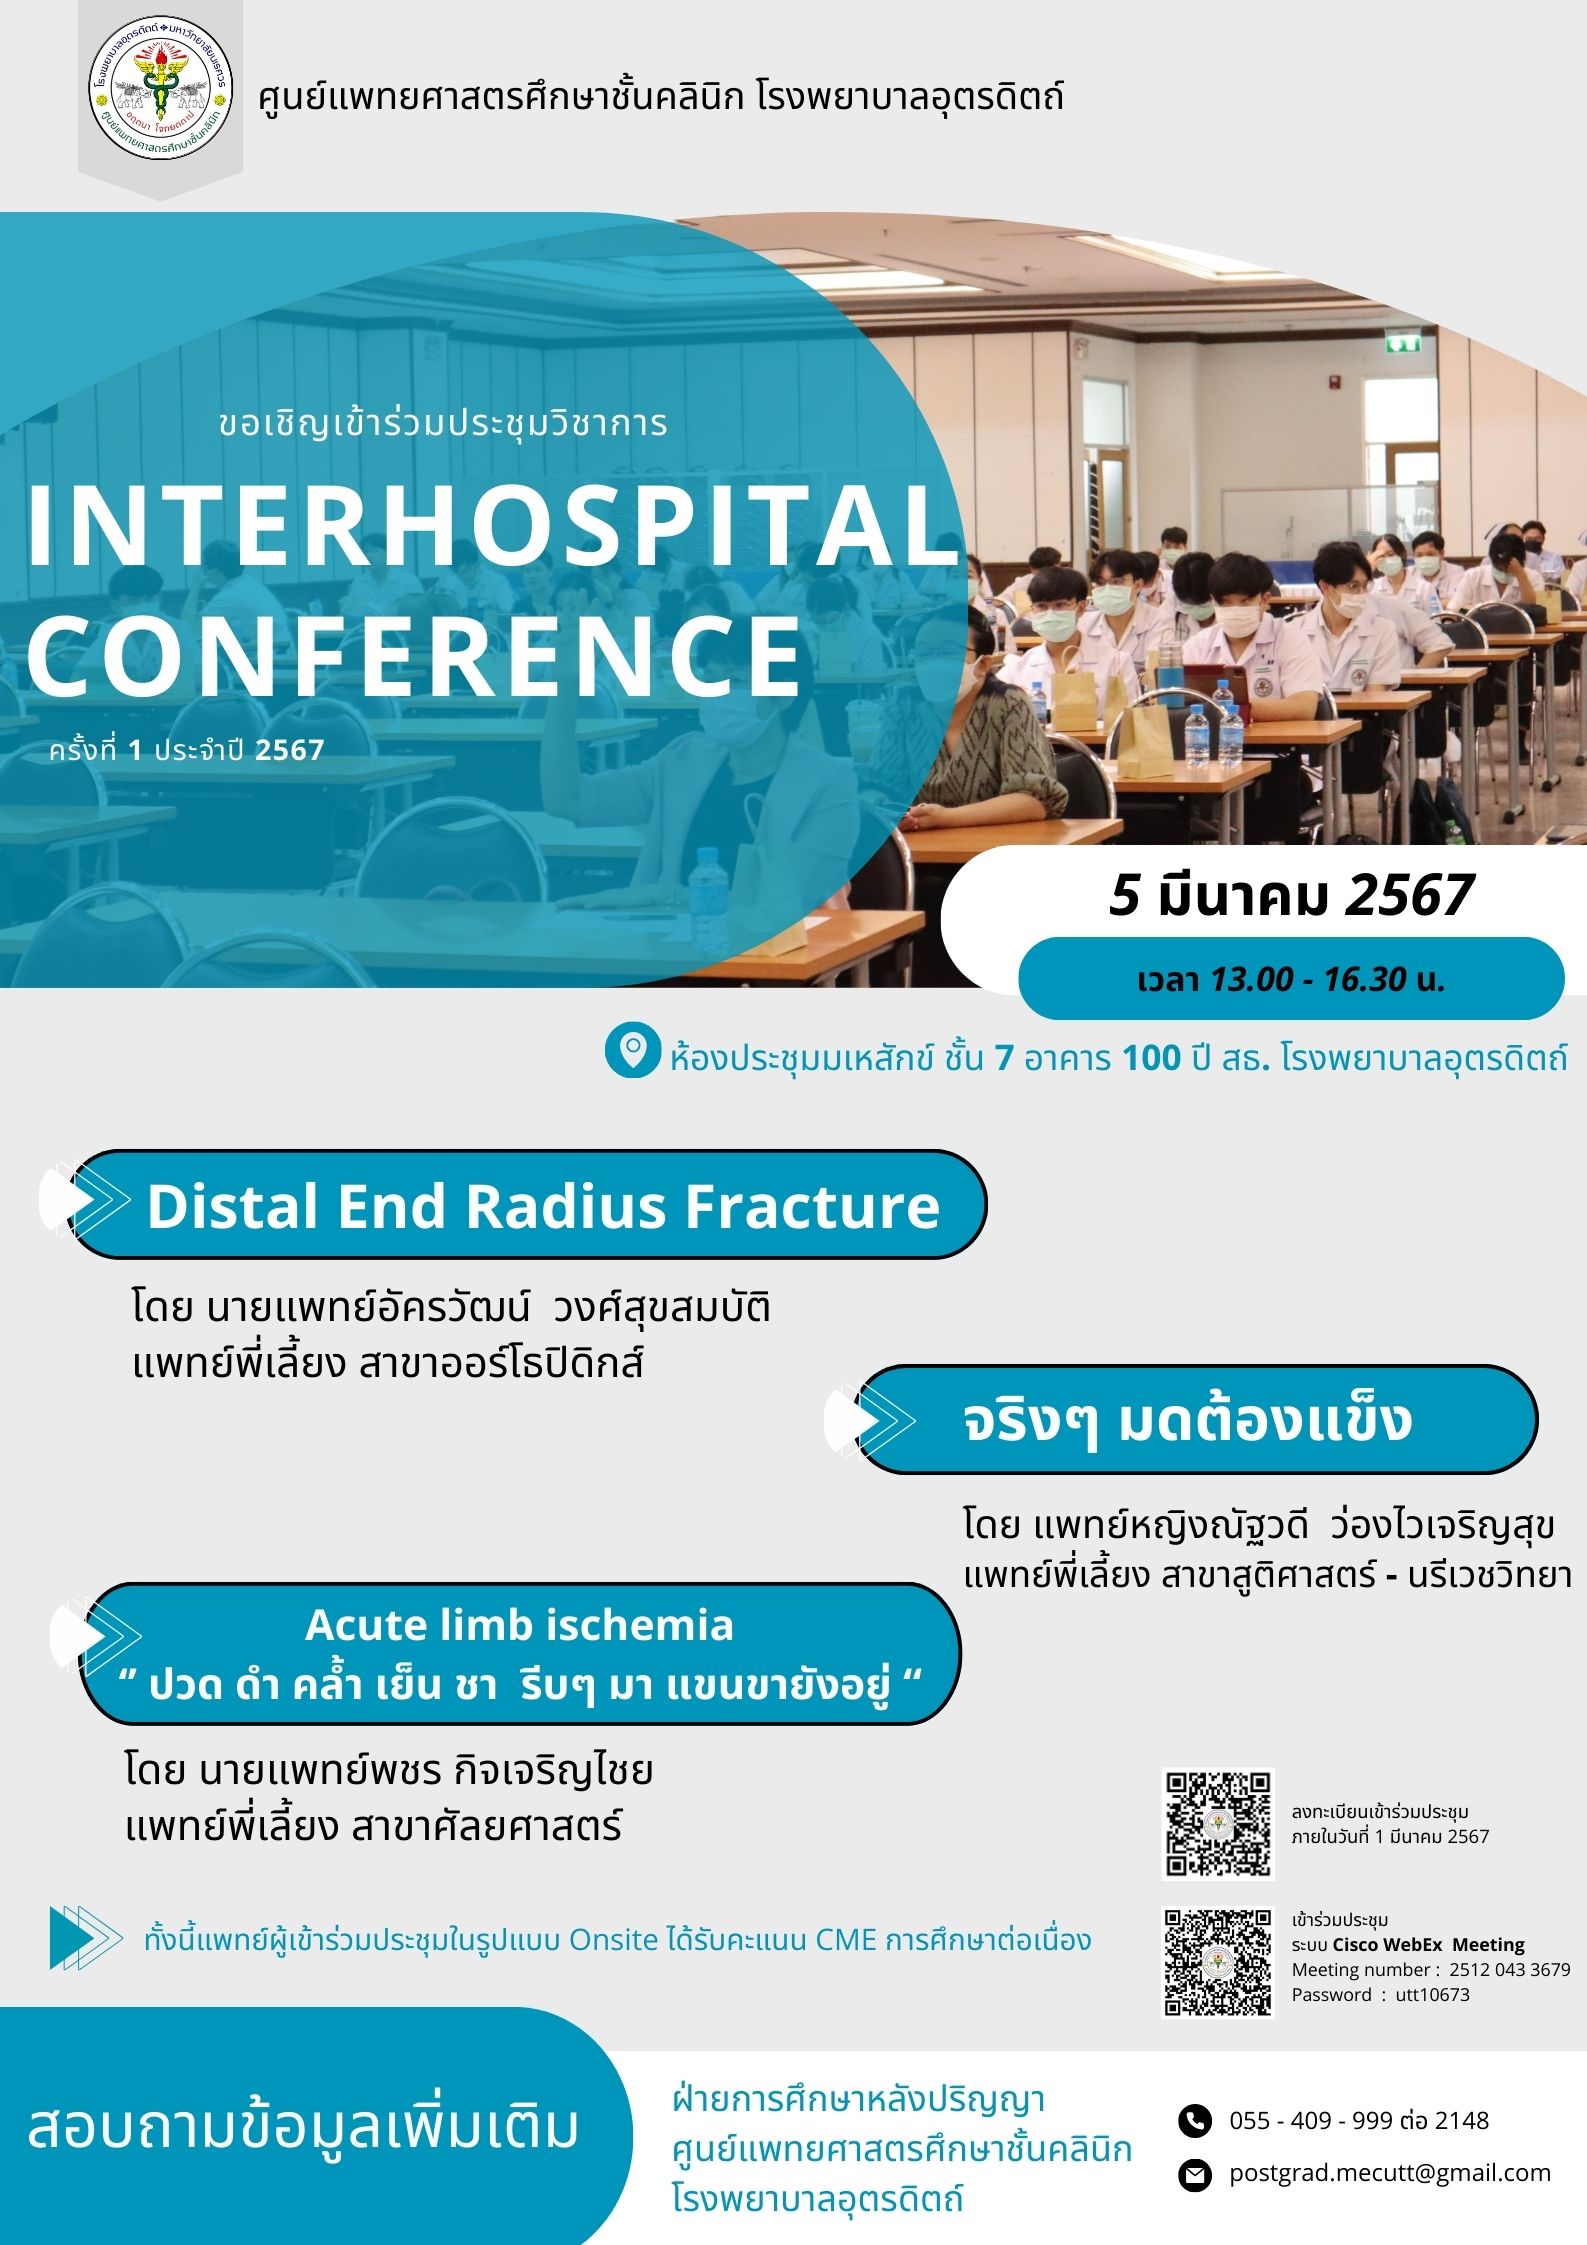 Interhospital conference ครั้งที่ 1/2567